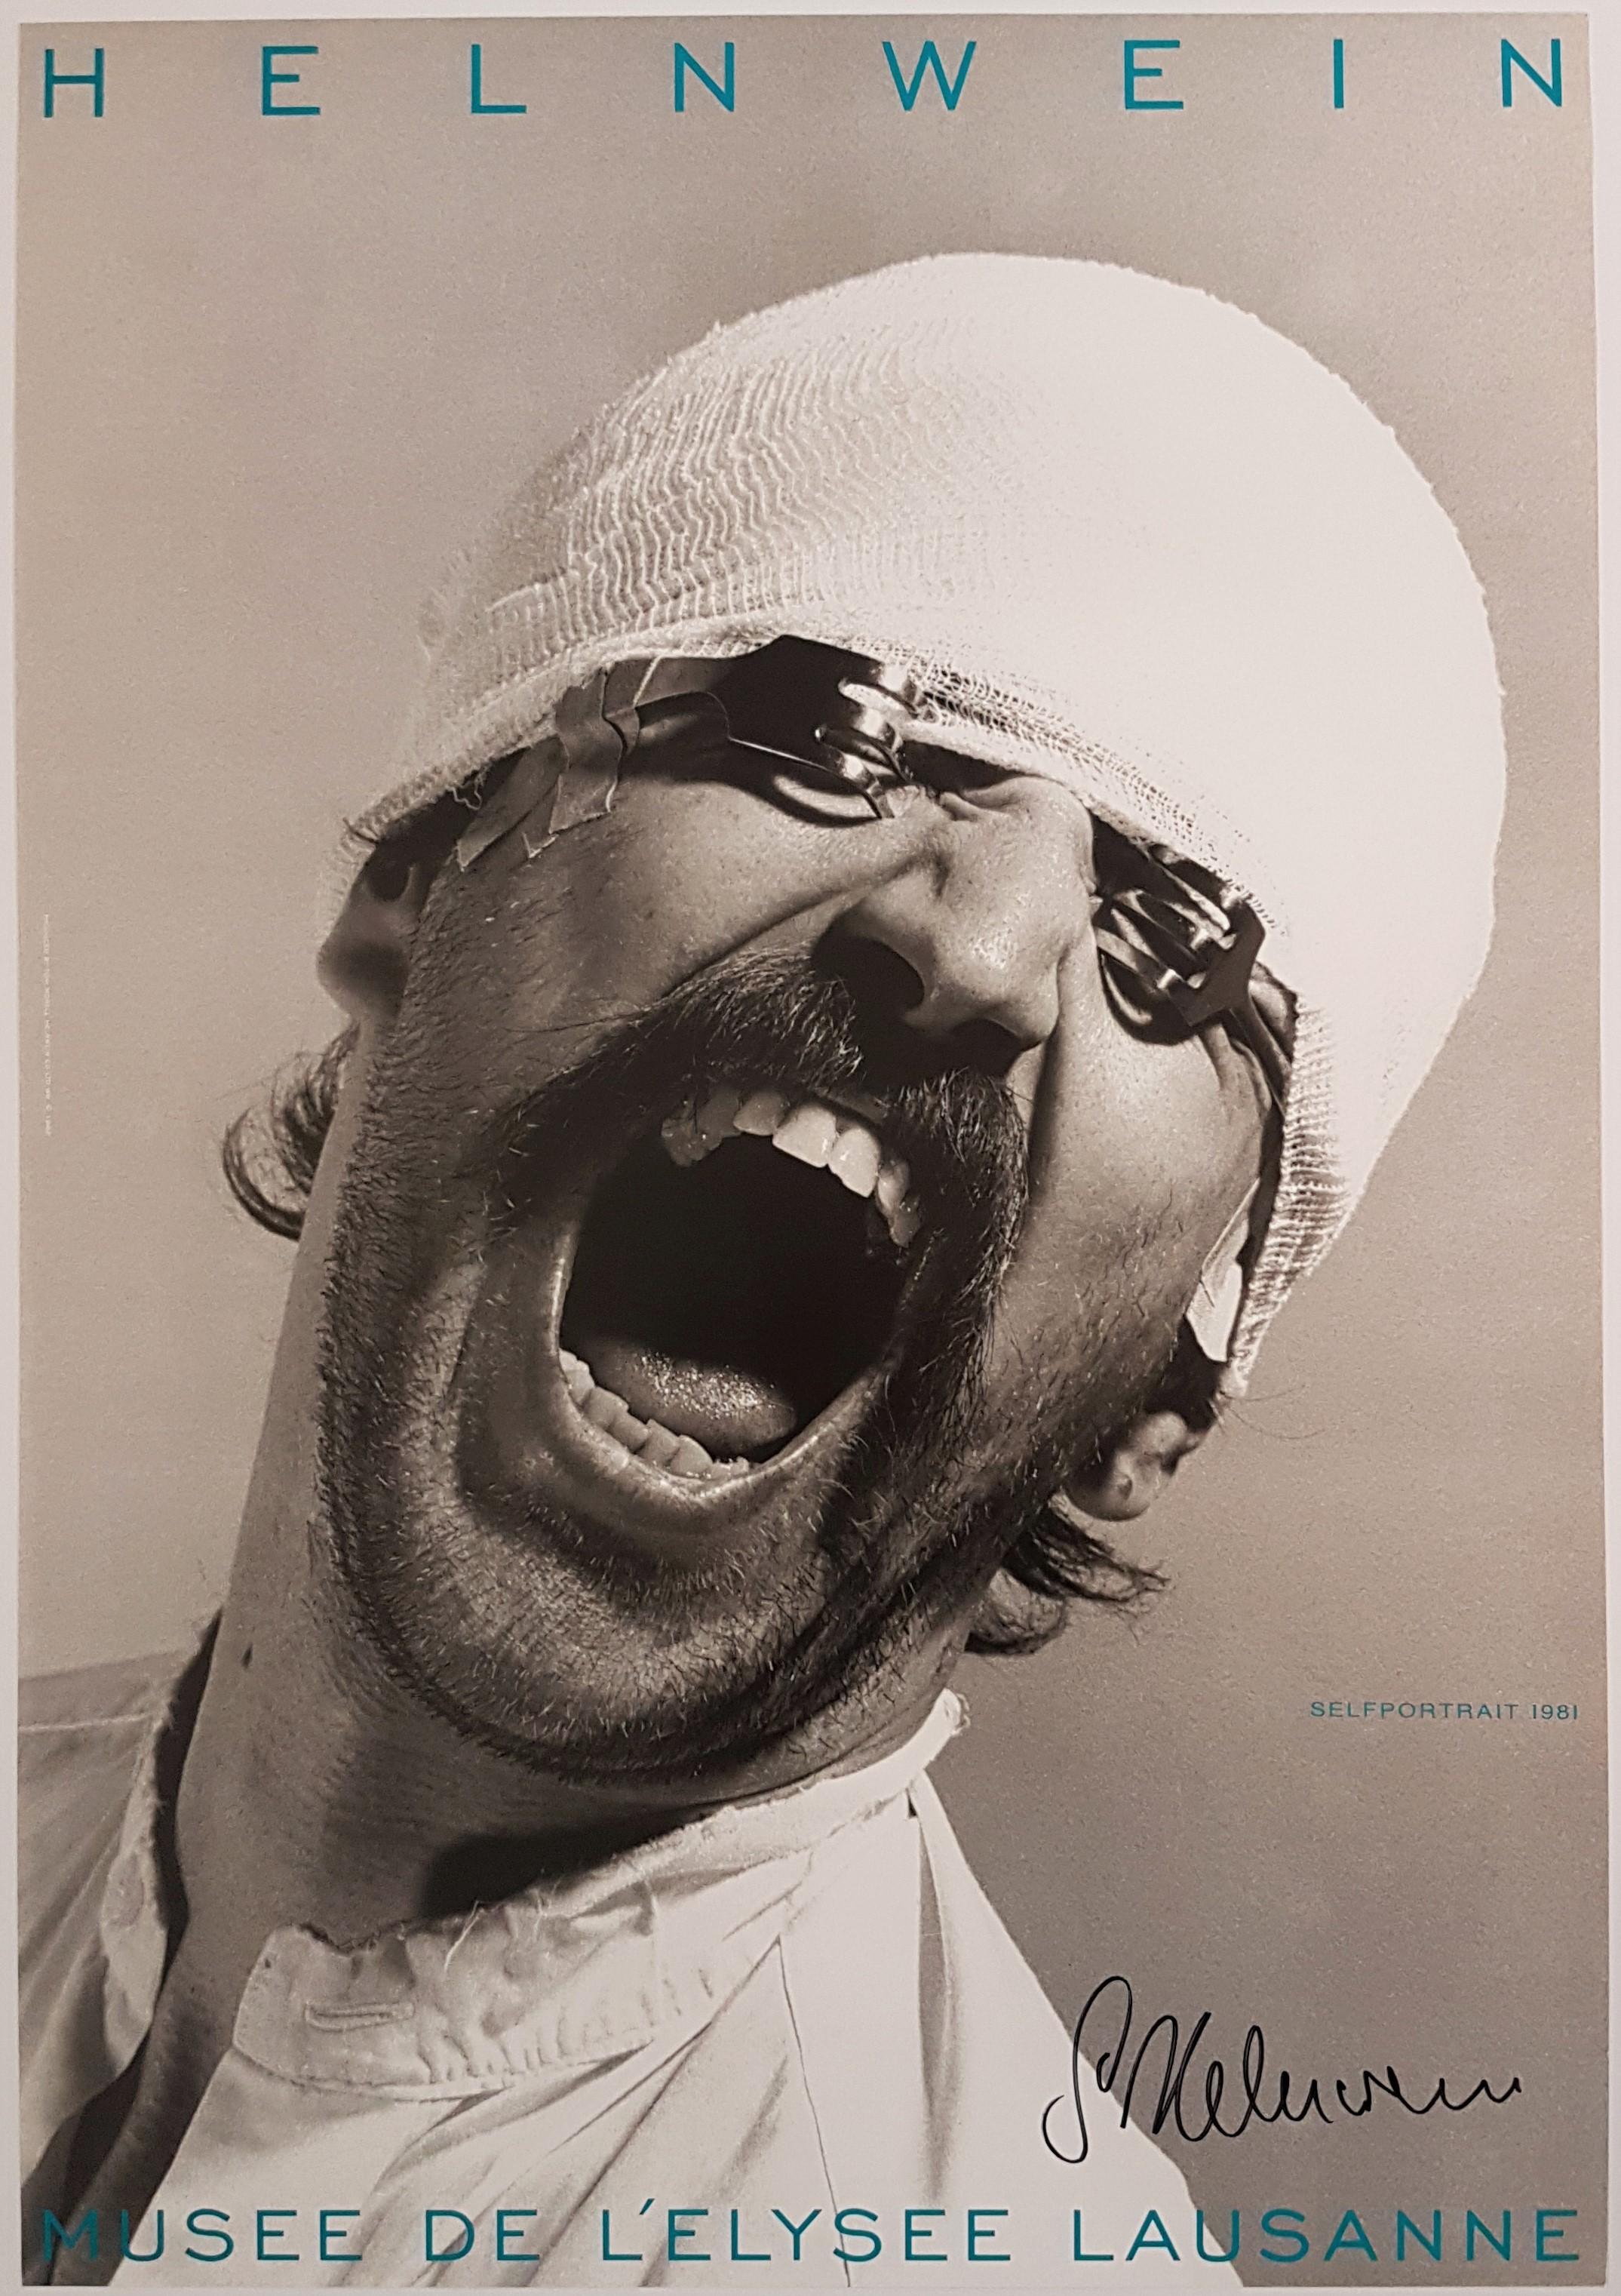 Gottfried Helnwein Portrait Photograph - Self-Portrait, 1992